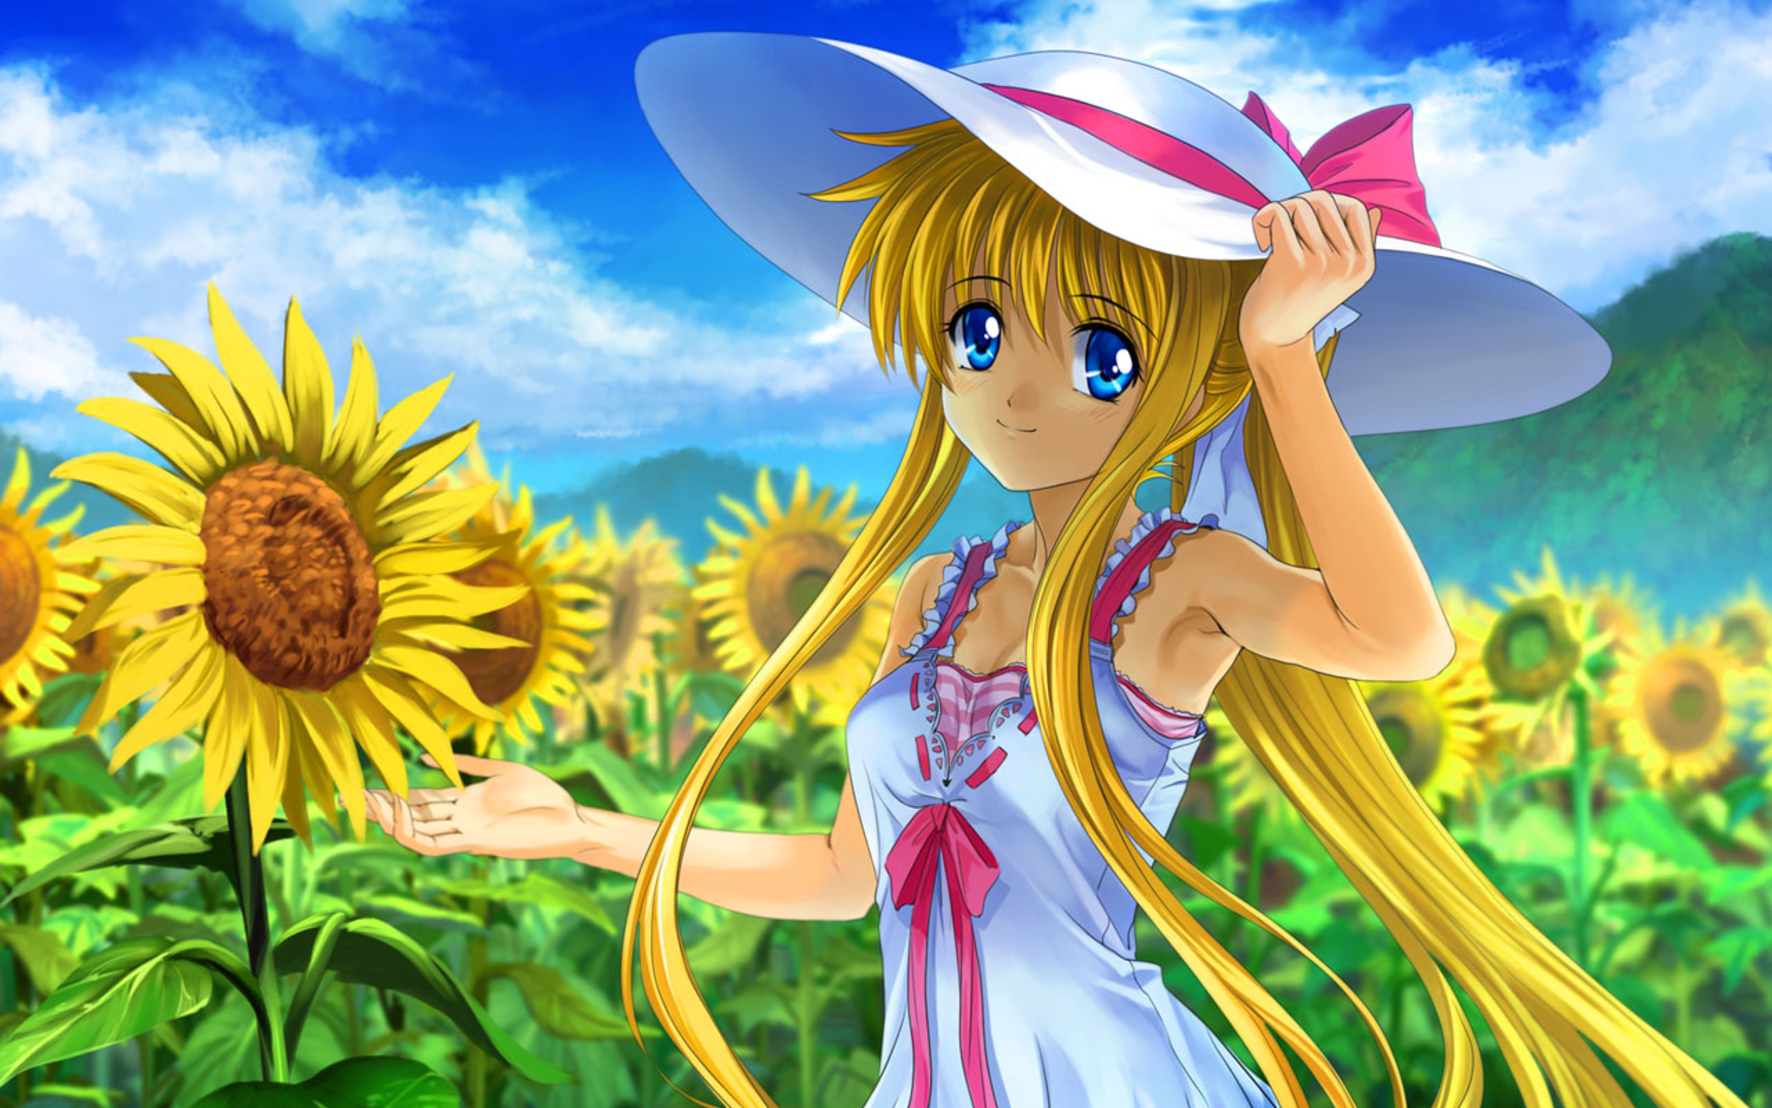 Anime 1772x1108 anime anime girls sunflowers flowers hat blue eyes plants nature women outdoors blonde dress long hair field sky smiling standing